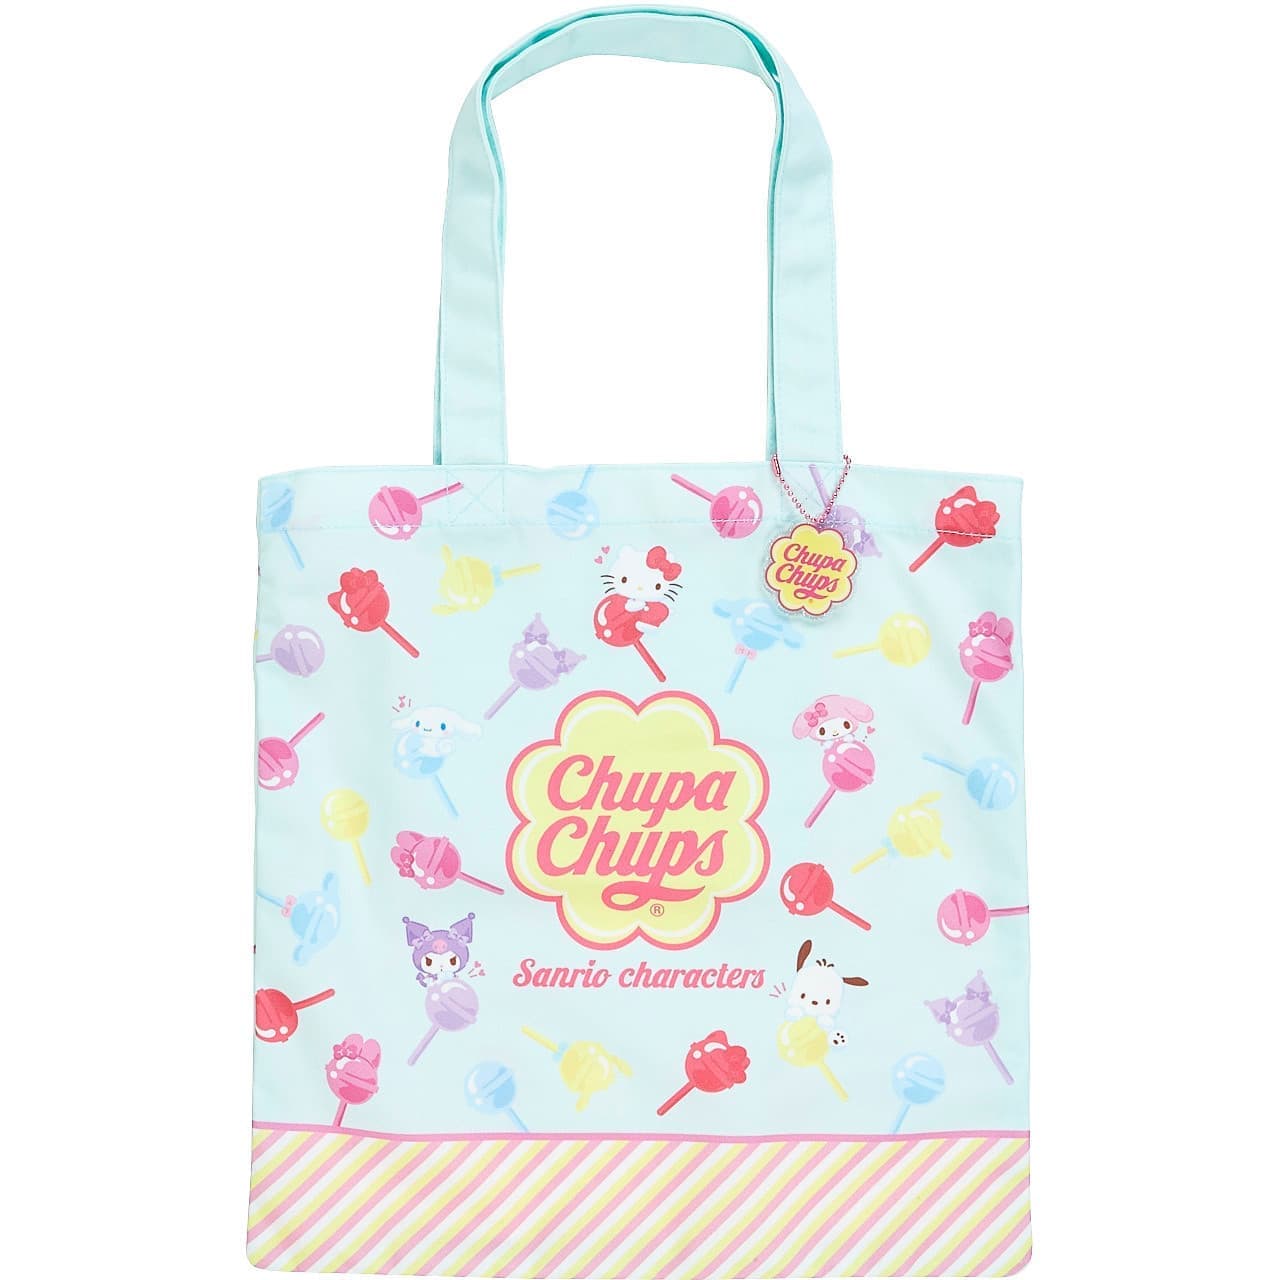 Chupa Chups & Sanrio Characters Tote Bag